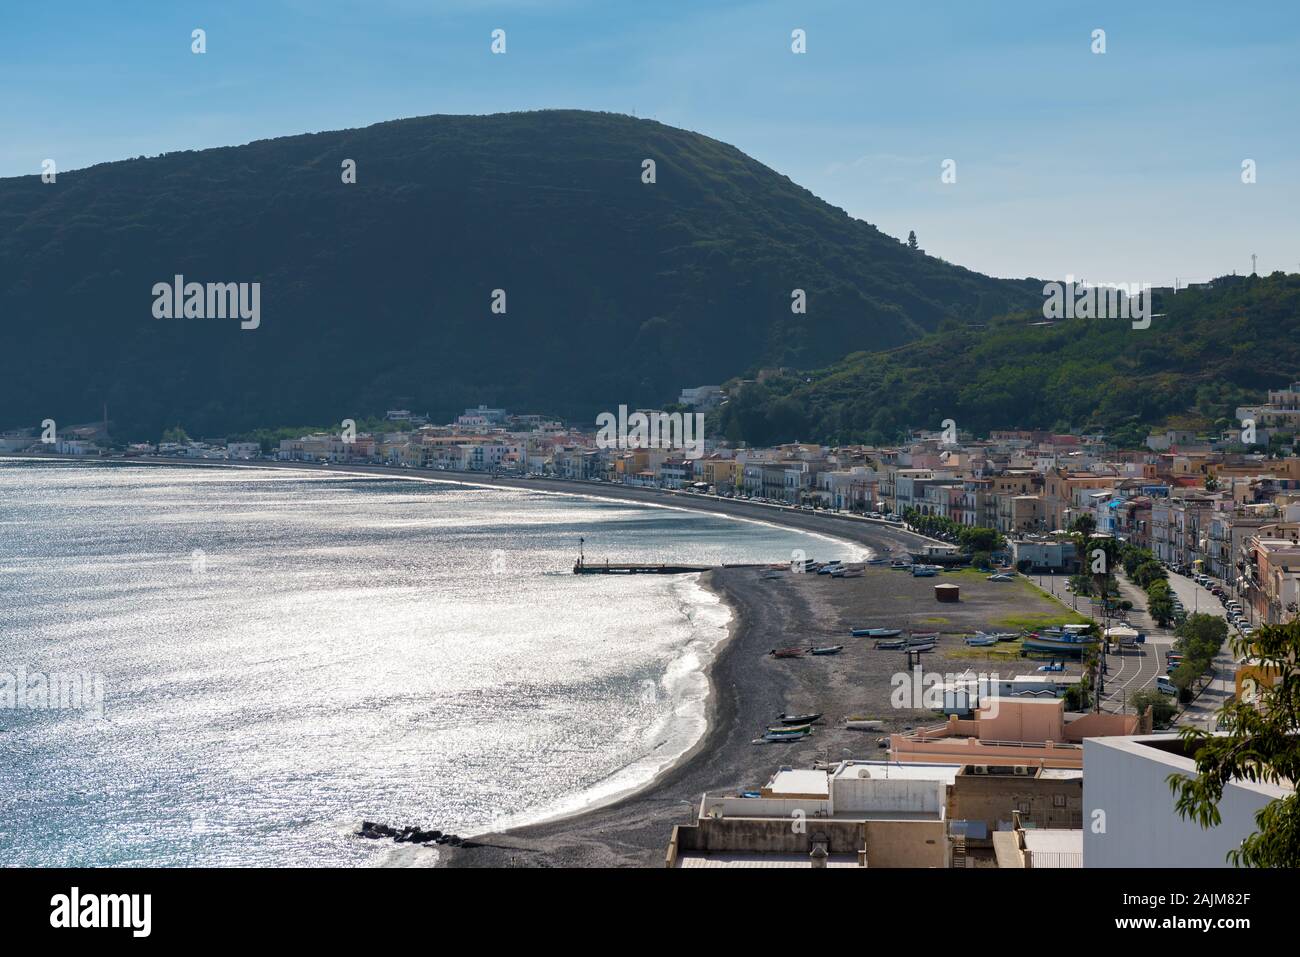 The city of Canneto and his black sand beach on aeolian Lipari island, Italy Stock Photo